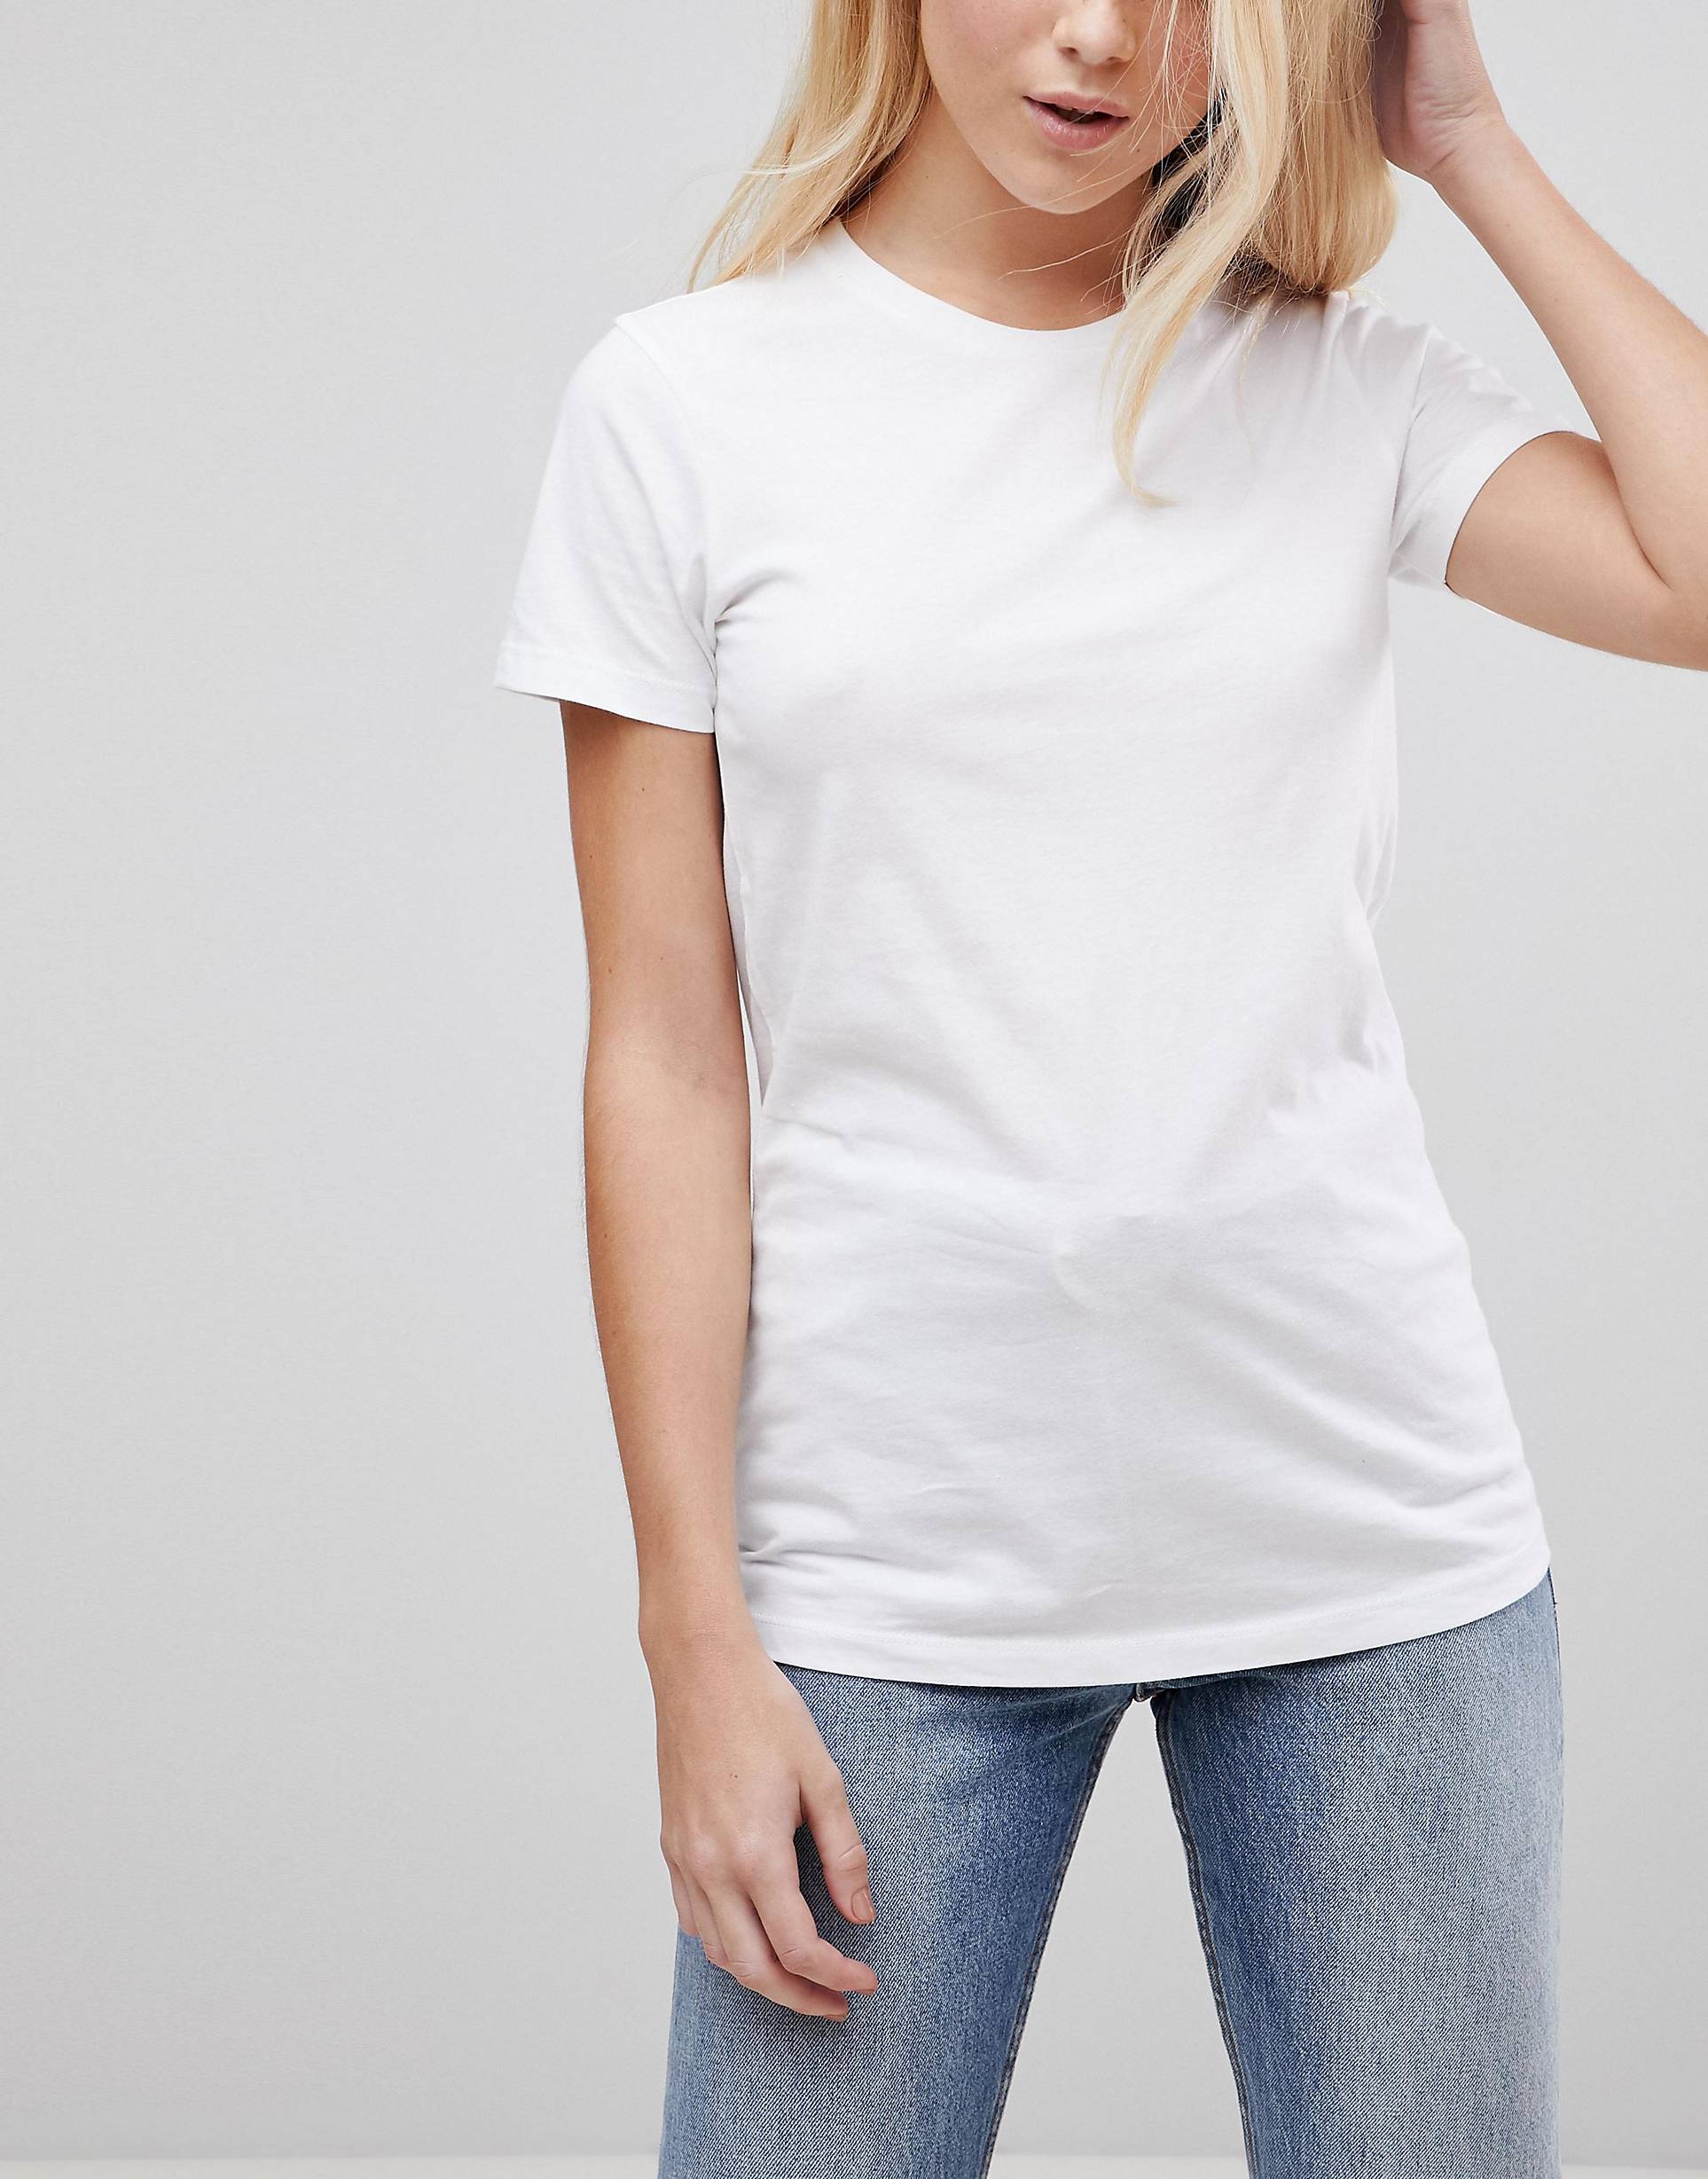 Shirt white girl. Белая футболка. Модель в белой футболке. Женщина в белой футболке. Белая футболка женская.